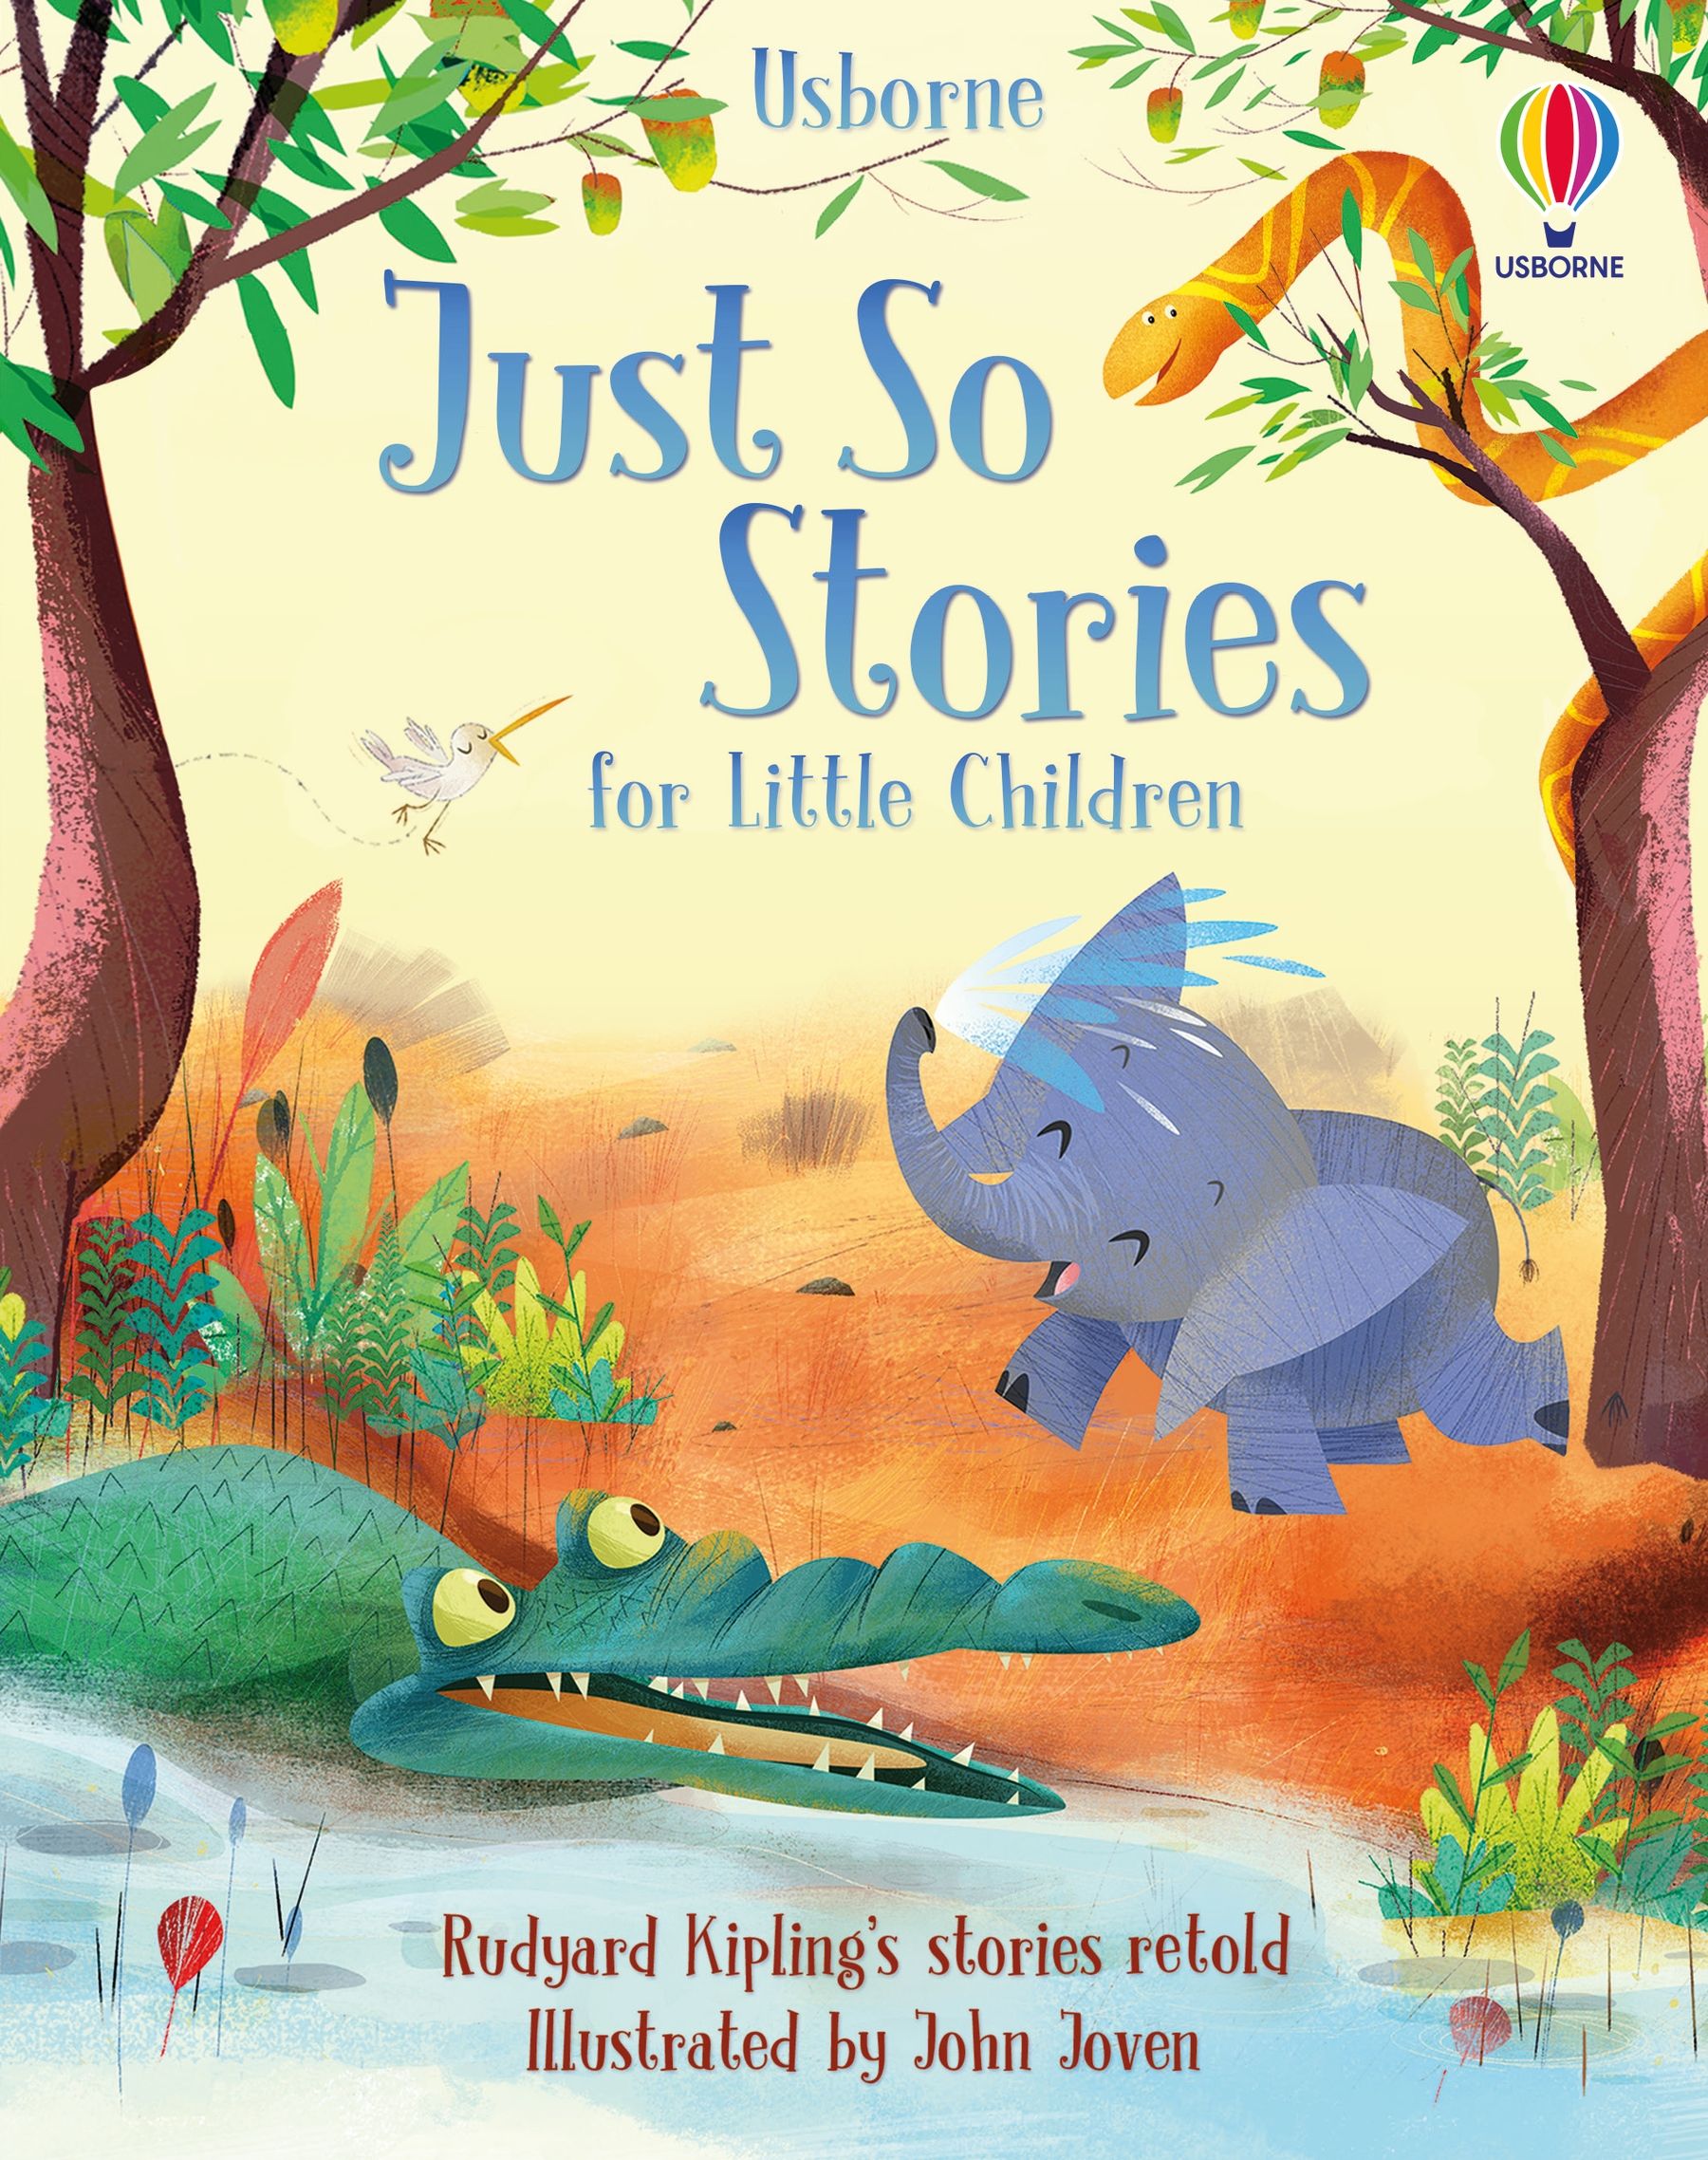 Little Bookworms | Usborne Just So Stories for Little Children by Weirs of Baggot Street